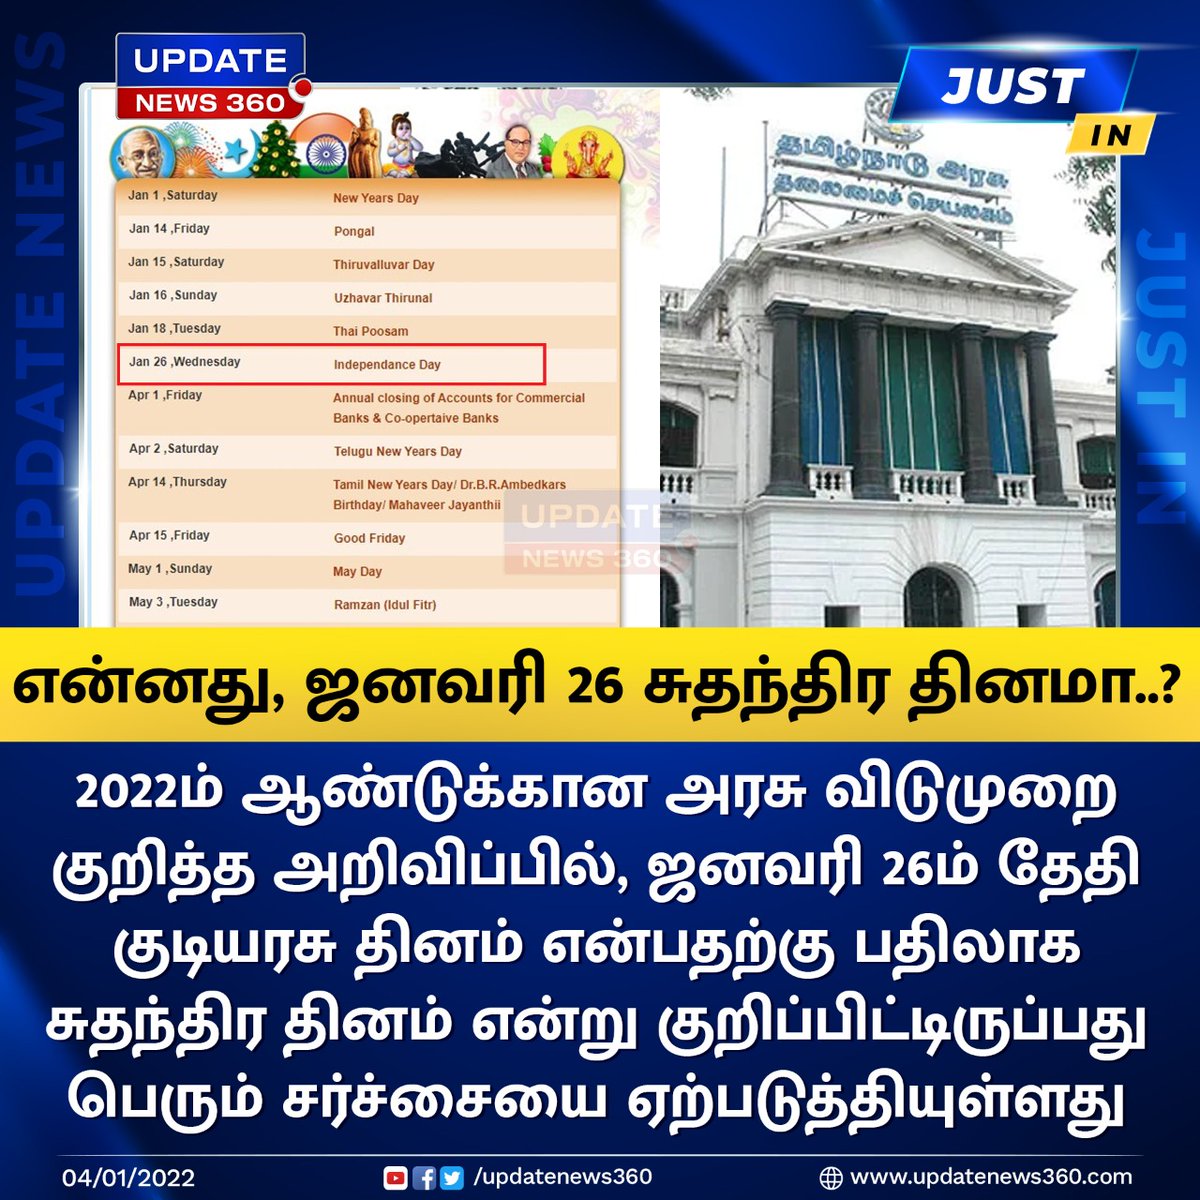 #JustIN | ஜனவரி 26ம் தேதி சுதந்திர தினமா..? கிண்டலுக்கு உள்ளான தமிழக அரசு..!!!

Link - tn.gov.in/holiday/2022

#UpdateNews360 | #IndependenceDay | #TamilNews | #RepublicDay | #GovernmentHolidays | #TNGovt | #TamilNadu | updatenews360.com